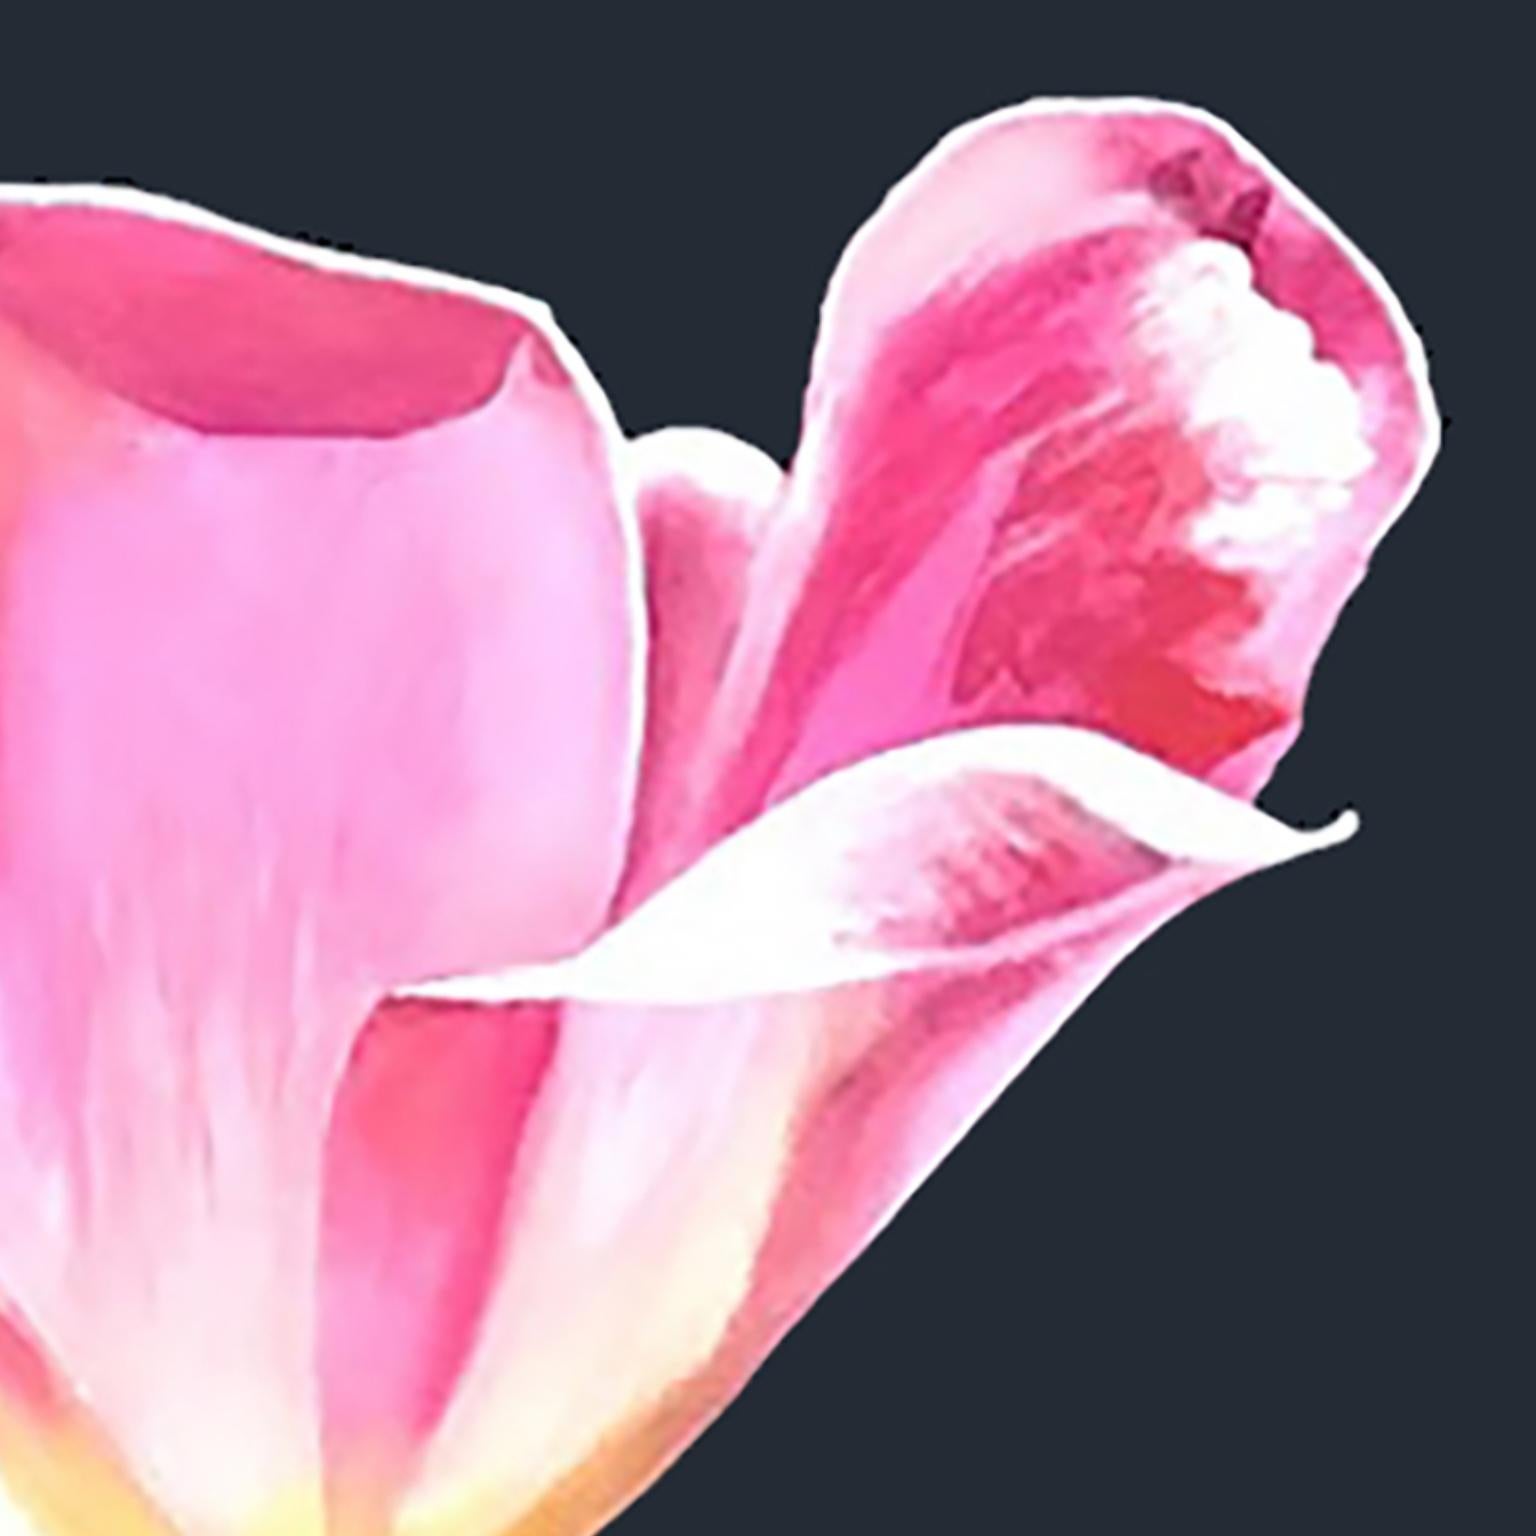 Tulipe rose - Contemporain Print par Charles Pachter